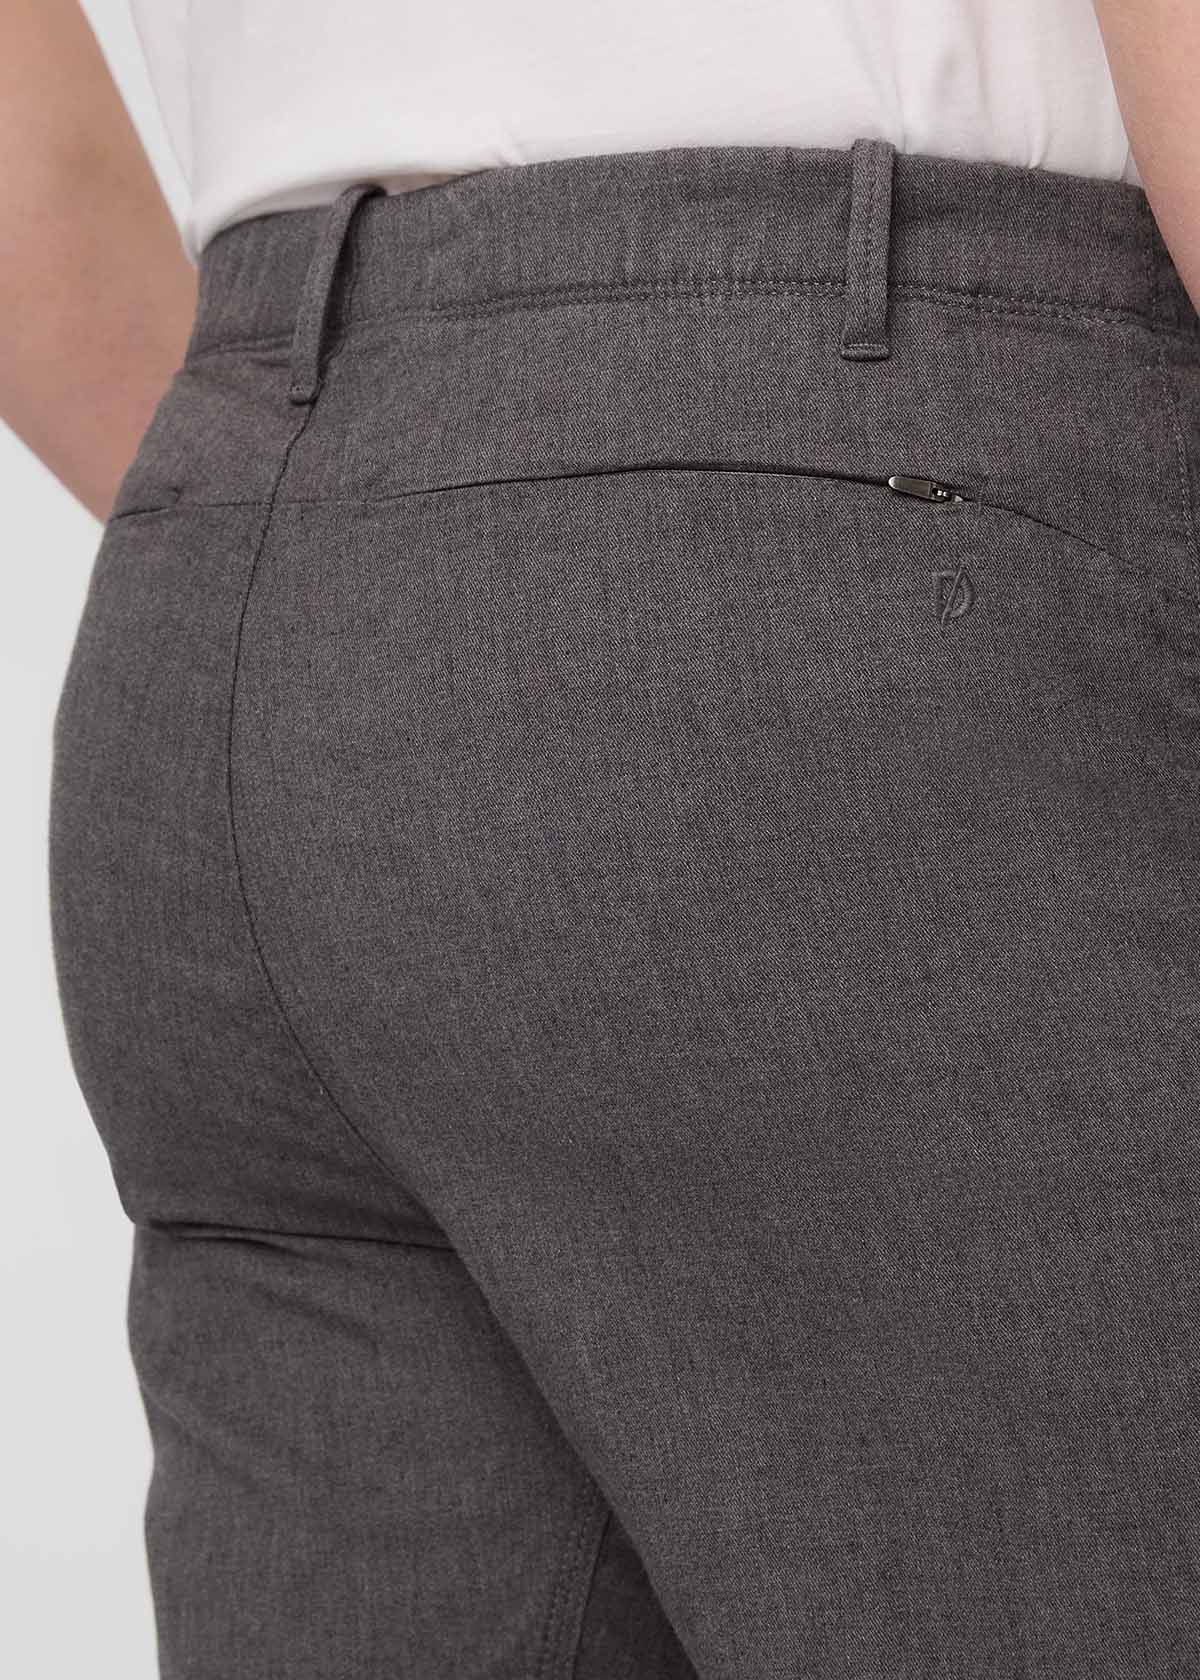 mens stretch heather grey chino pants back zip pocket closed